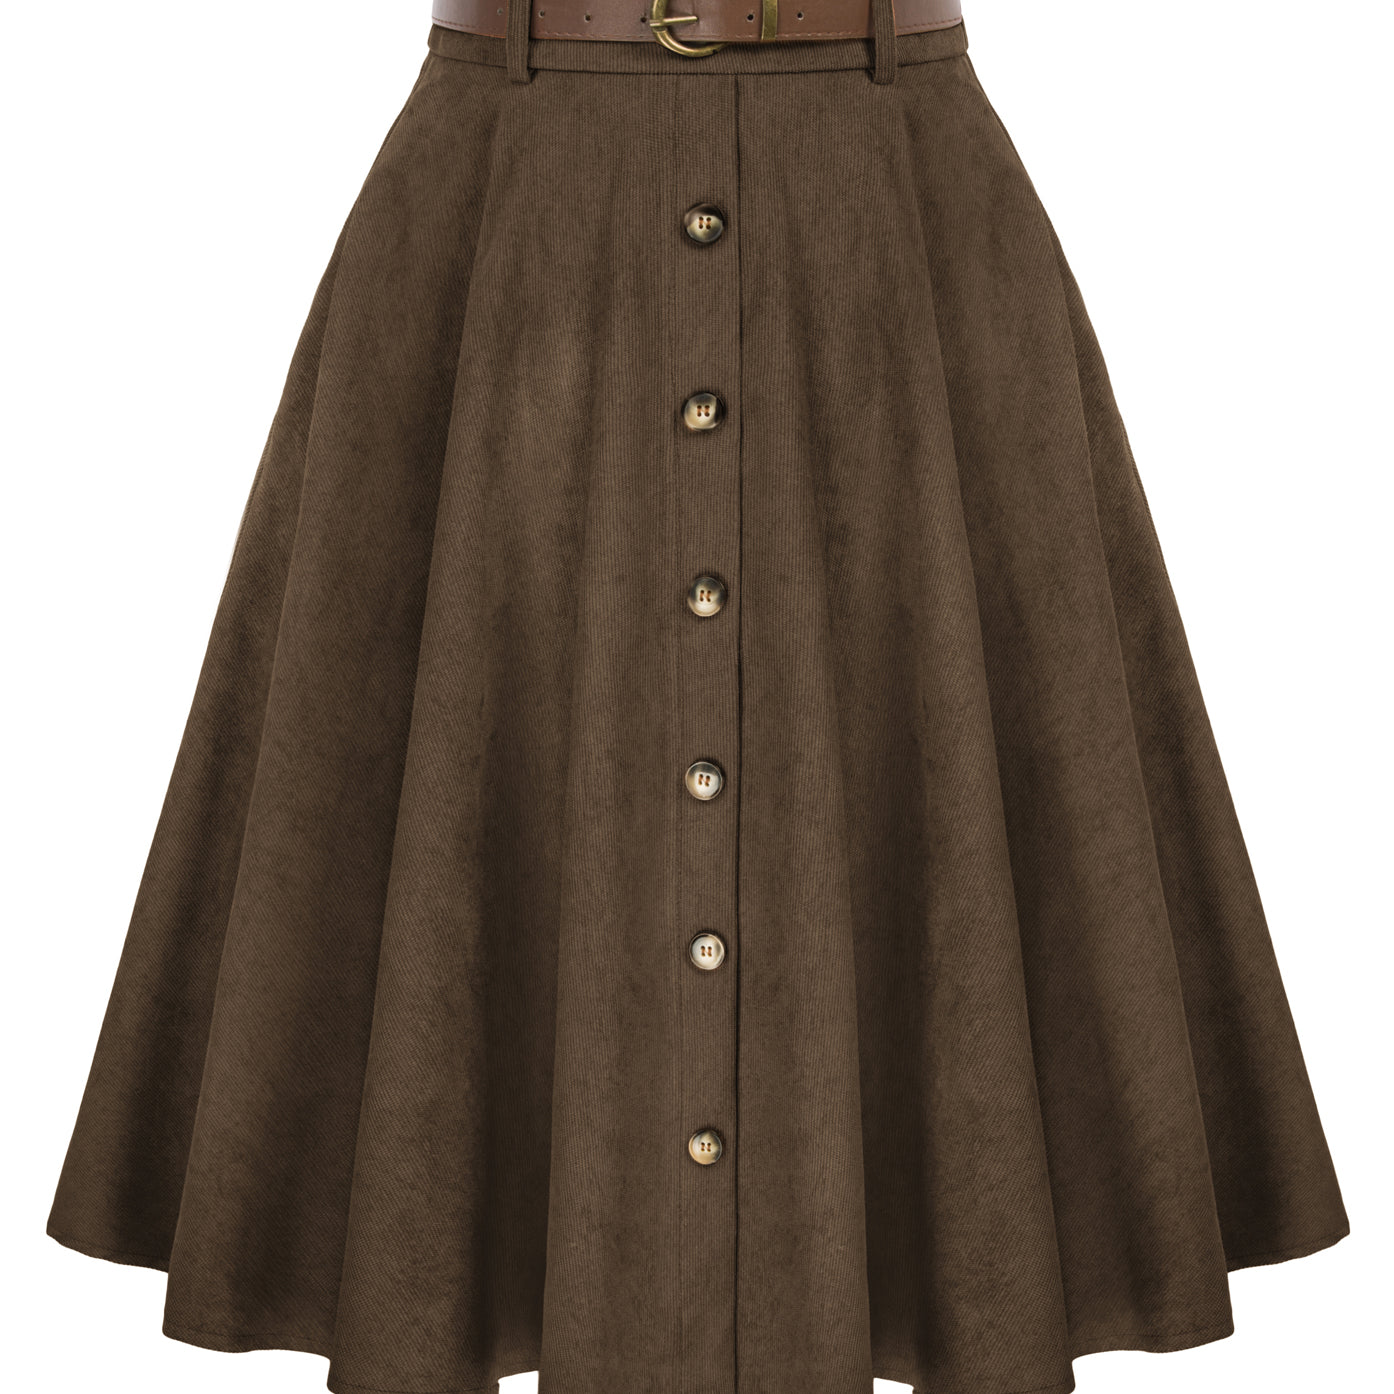 Corduroy Skirt with Belt Elastic High Waist Mid-Calf Swing Skirt